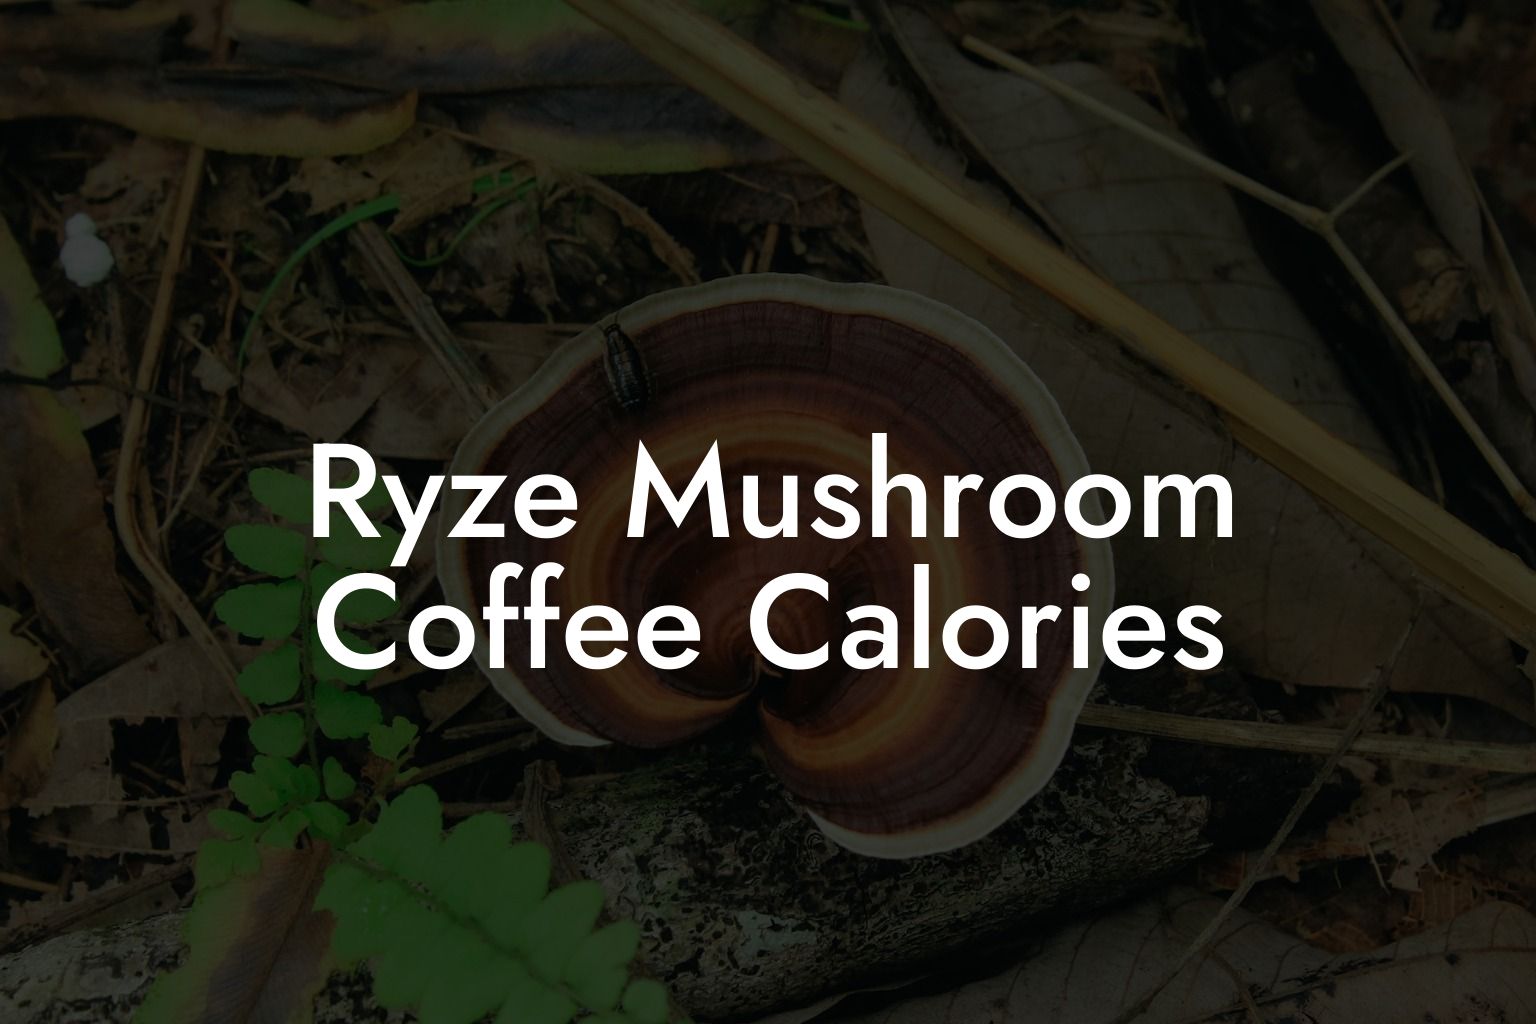 Ryze Mushroom Coffee Calories